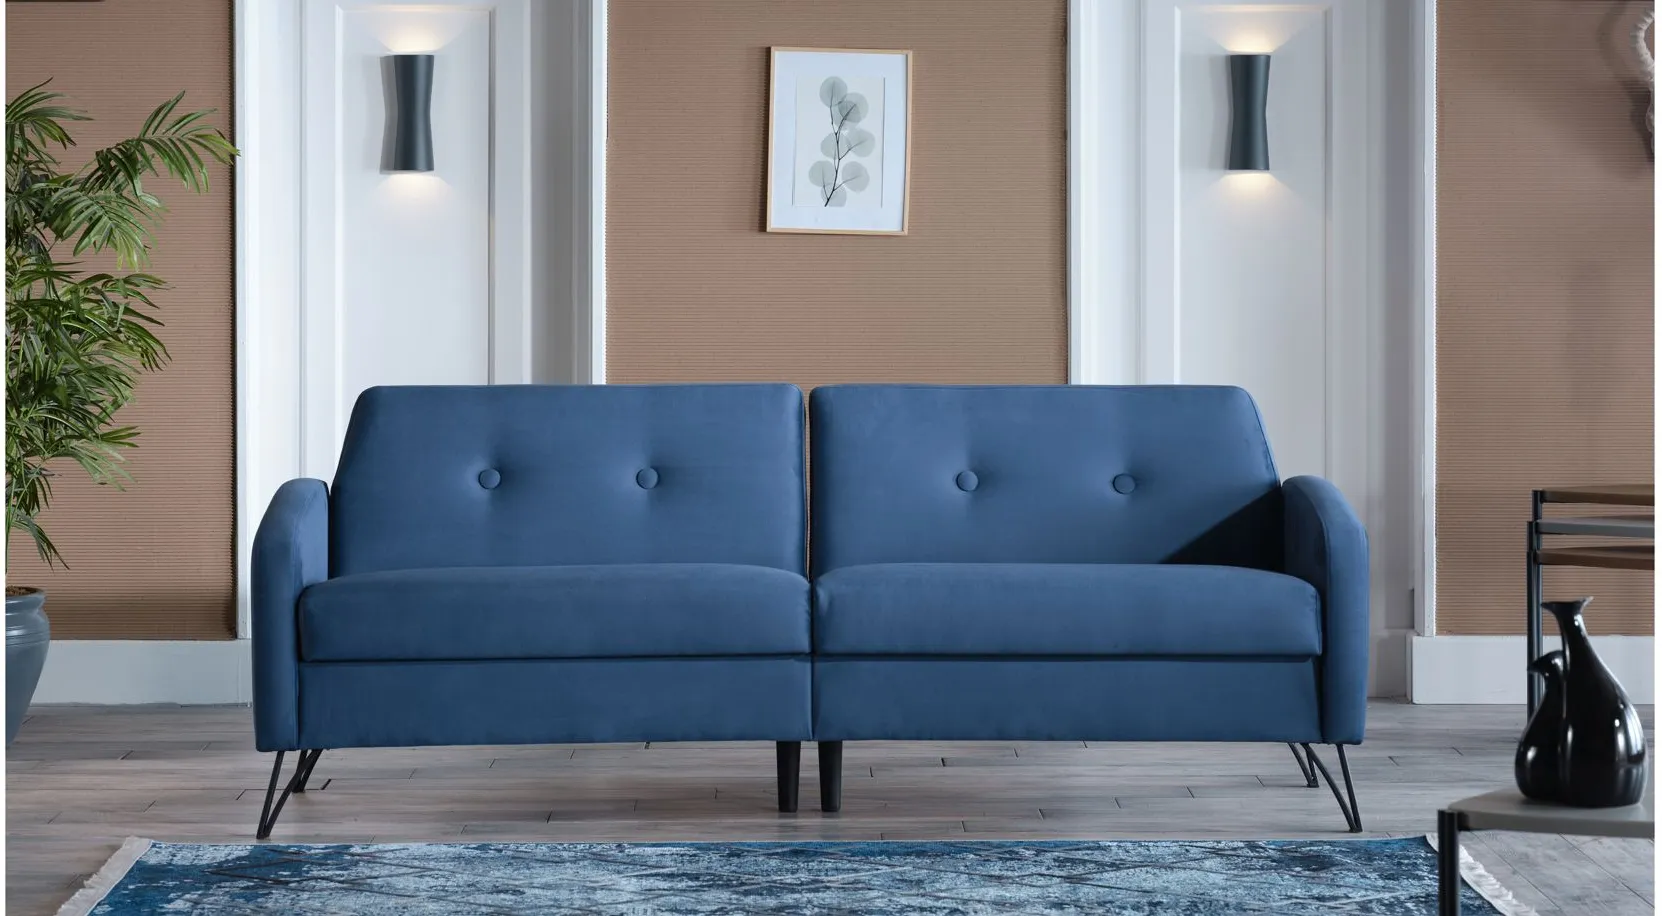 Covington Tufted Futon Sofa with Storage in Blue by HUDSON GLOBAL MARKETING USA